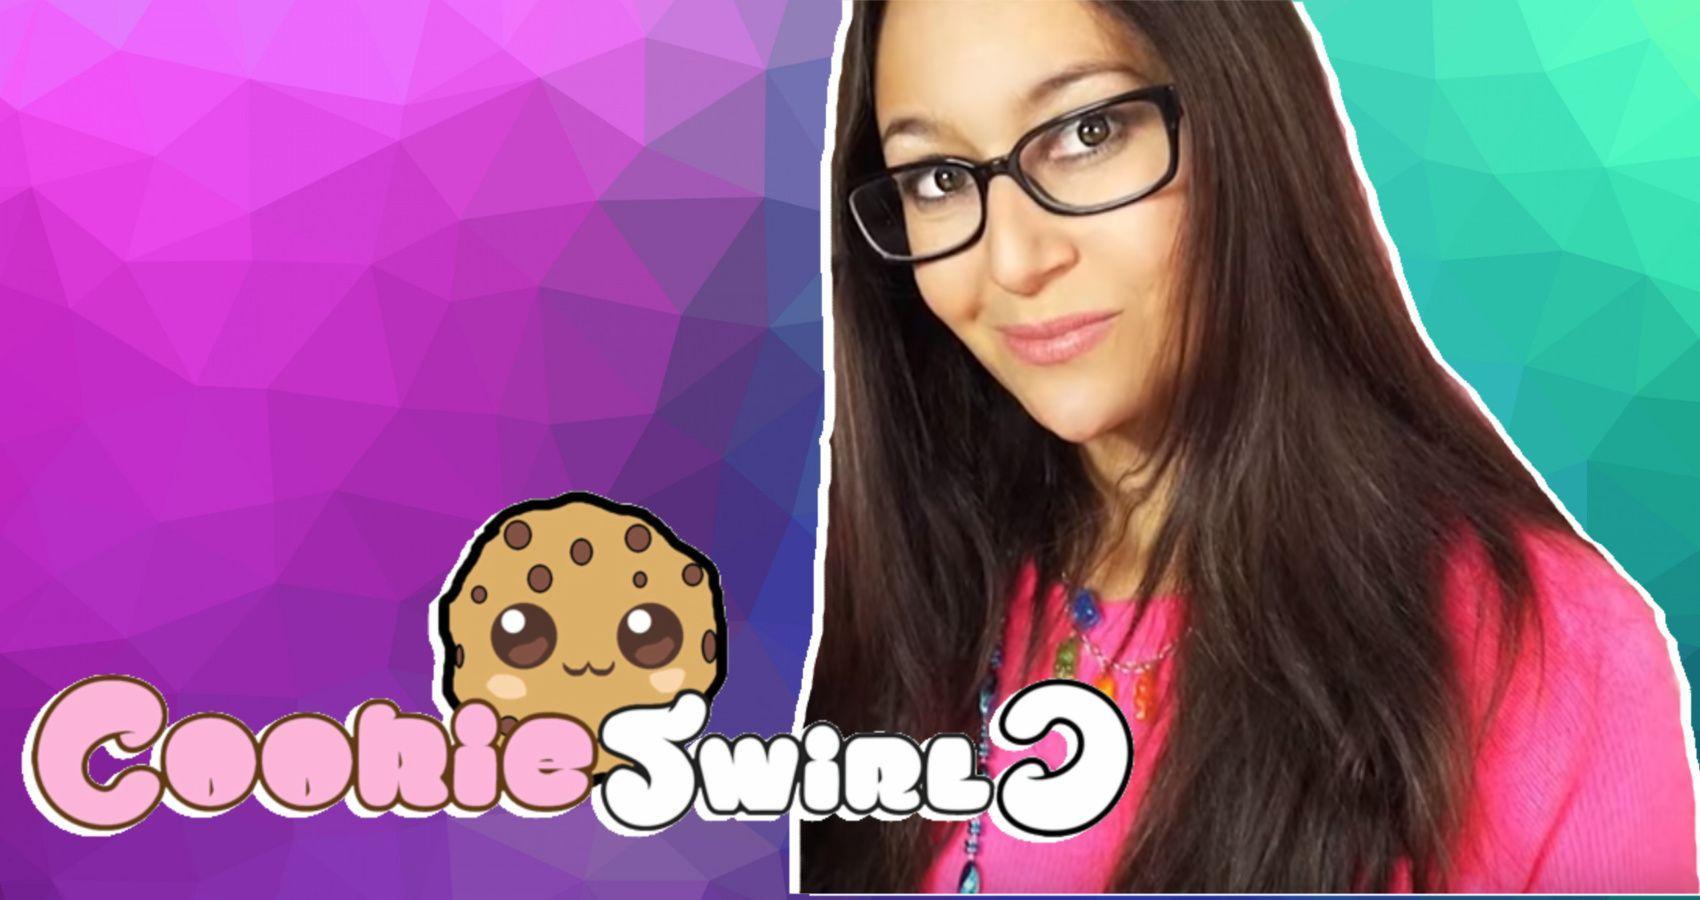 Free #cookieswirlc Full HD Wallpaper images.